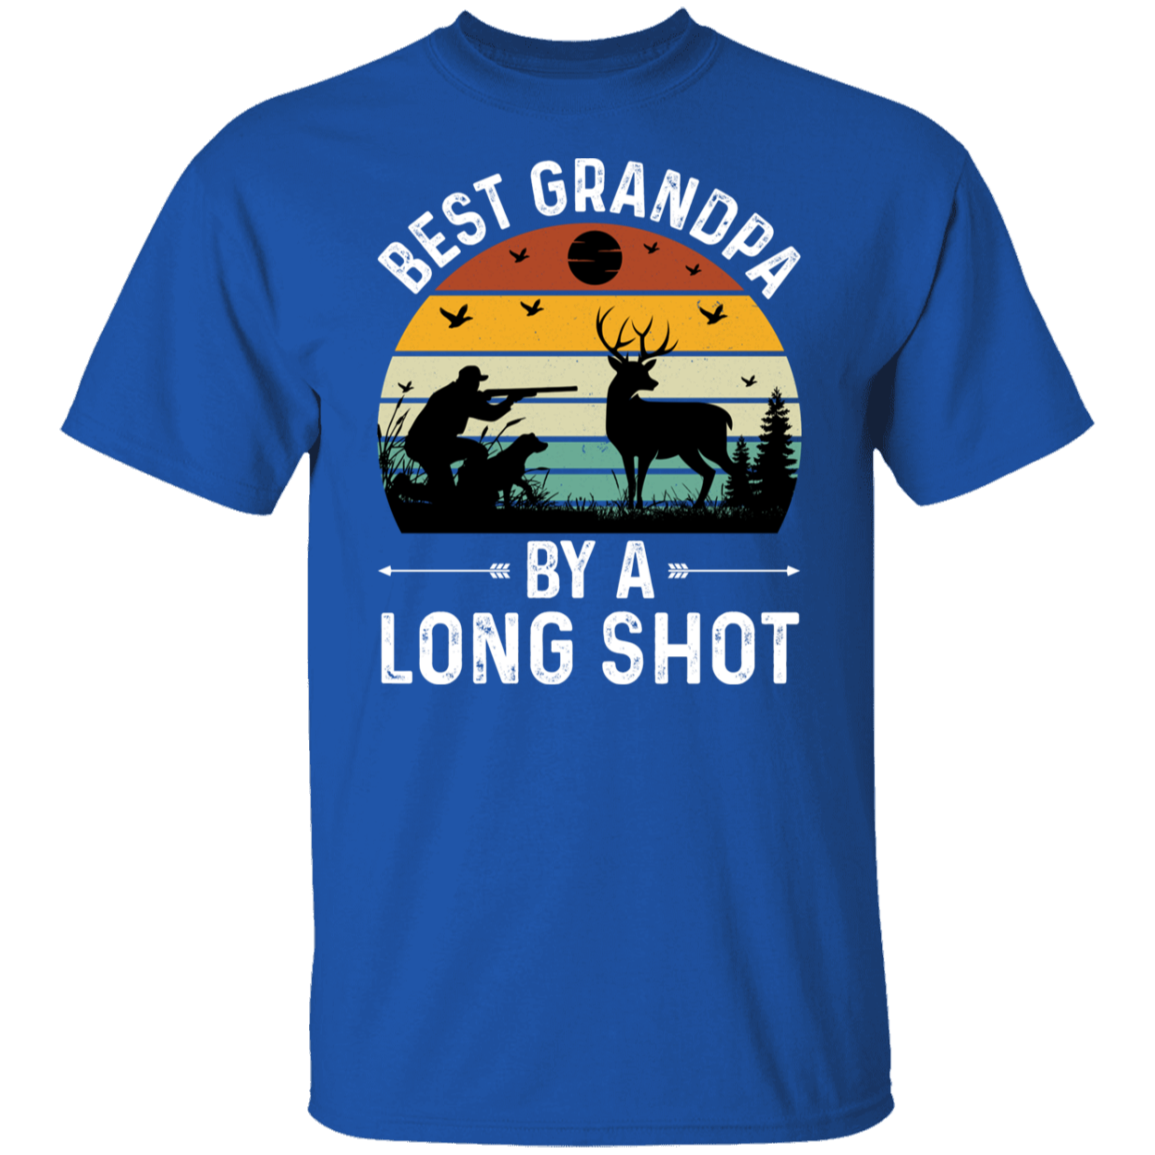 Best Grandpa by a Long Shot